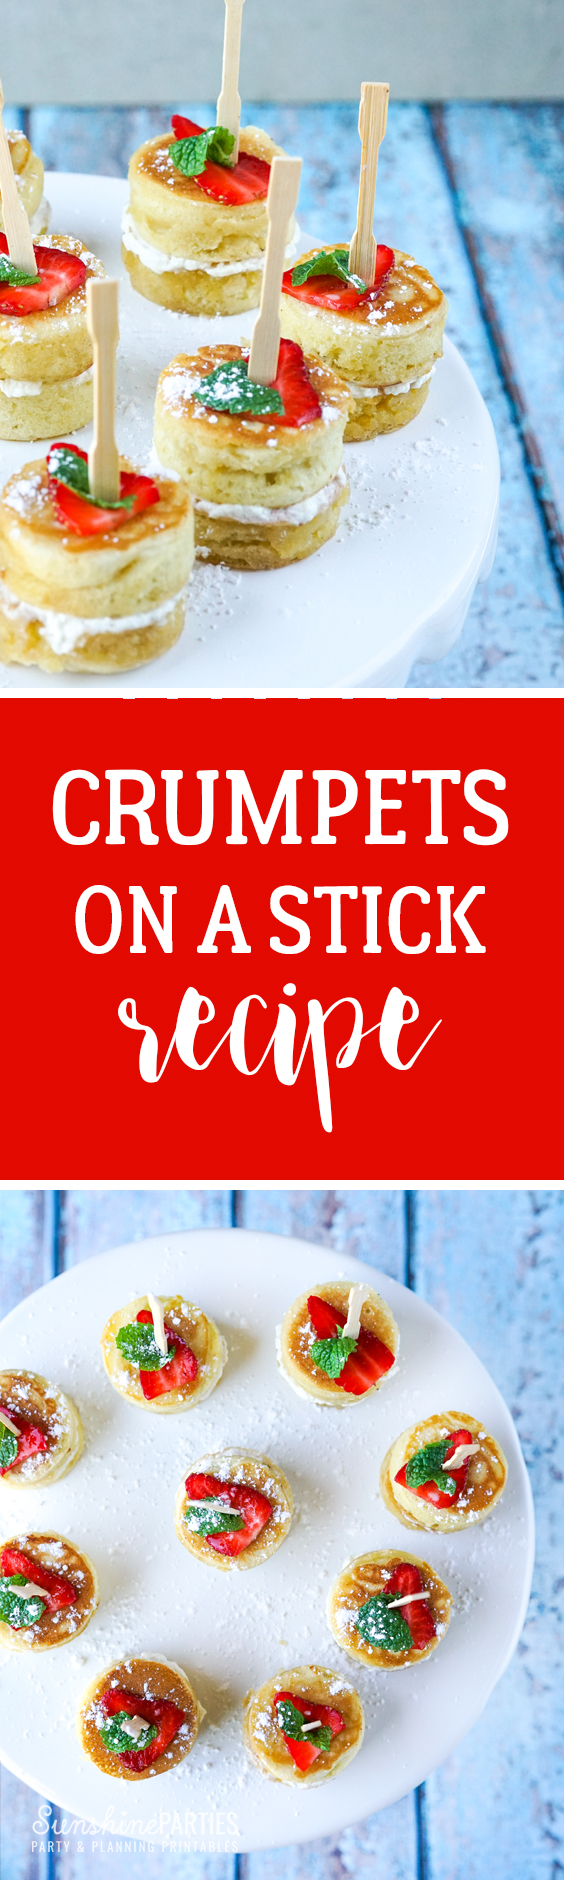 Crumpets on a Stick Recipe